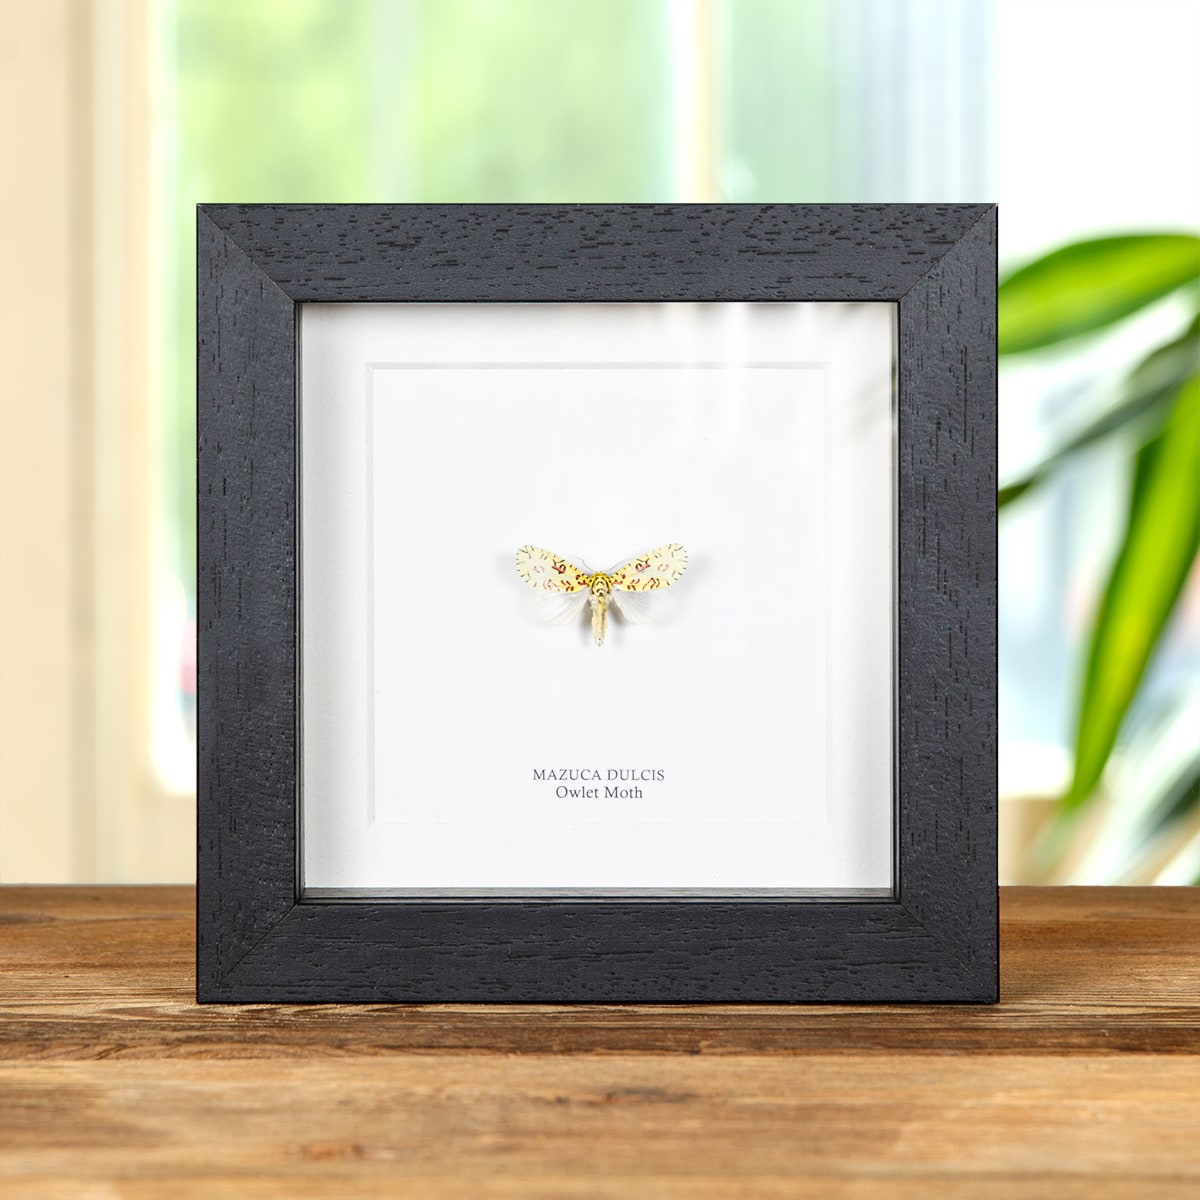 Minibeast Owlet Moth In Box Frame (Mazuca dulcis)